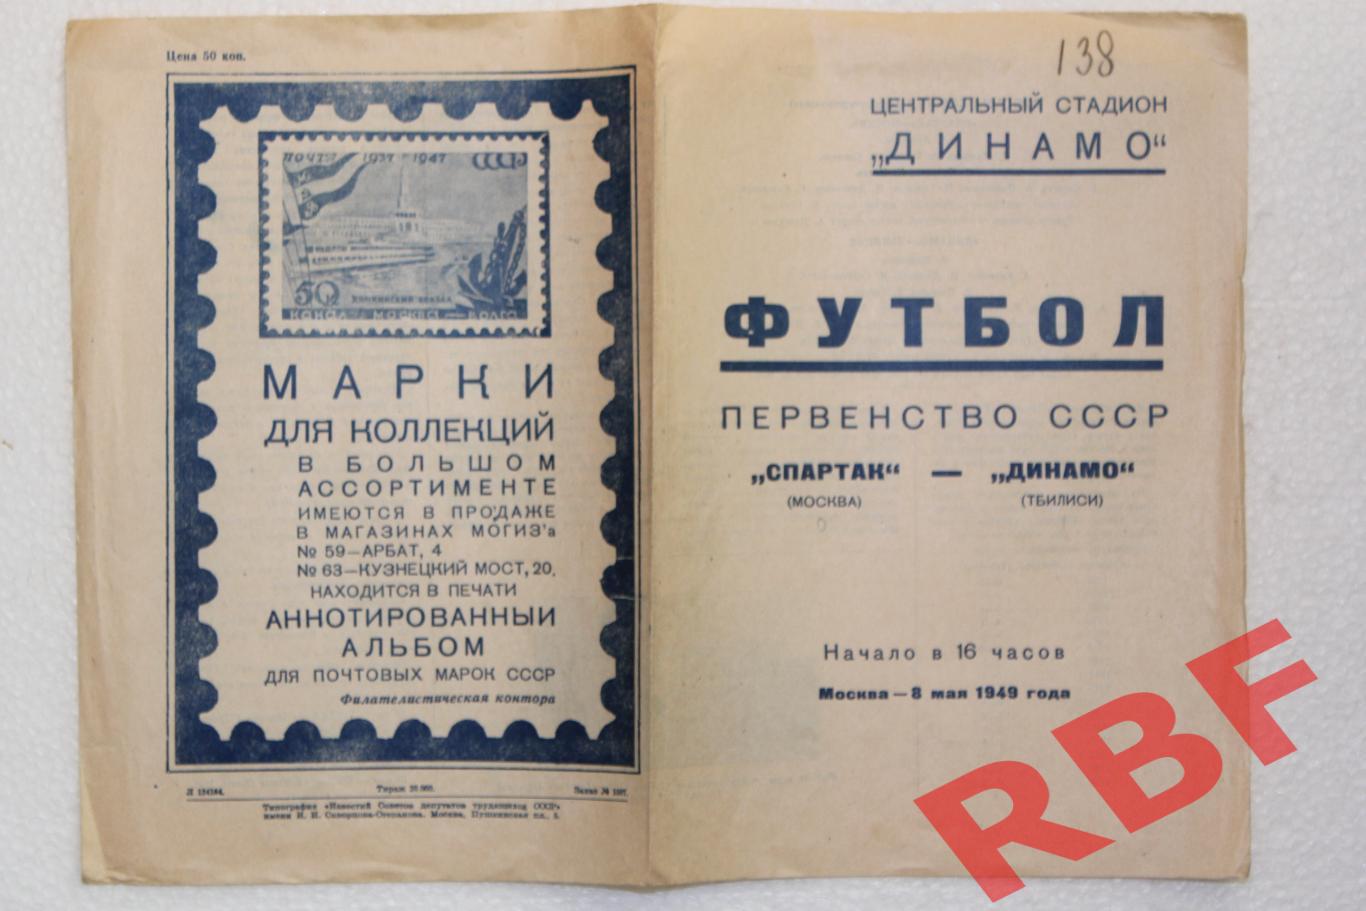 Спартак Москва - Динамо Тбилиси,8 мая 1949 1